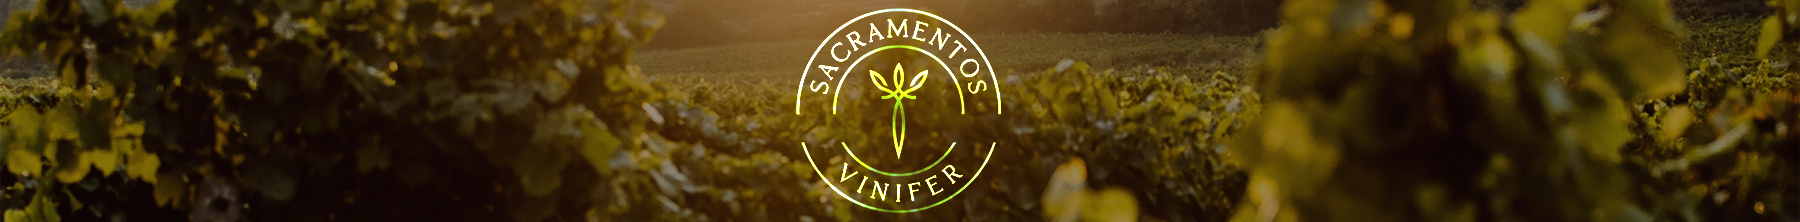 Sacramentos Vinifer